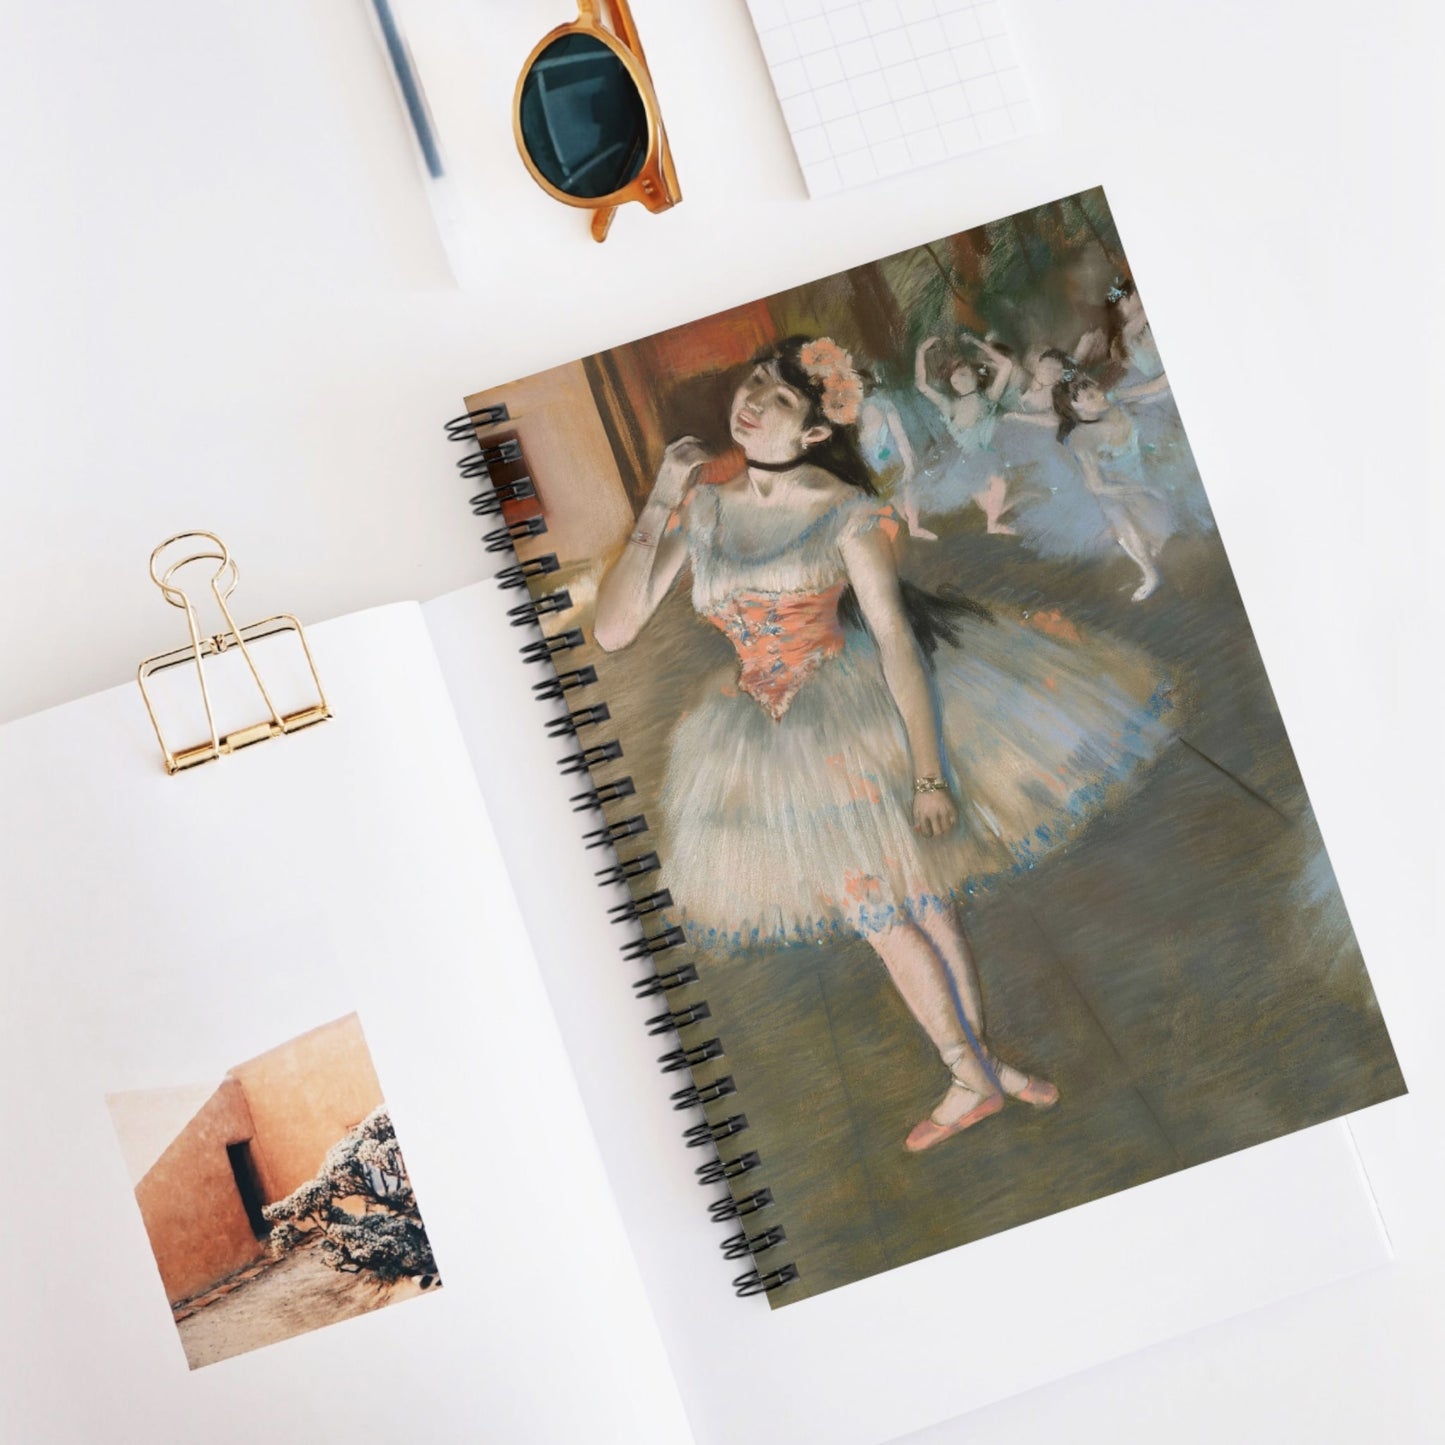 Ballerina Painting Spiral Notebook Displayed on Desk